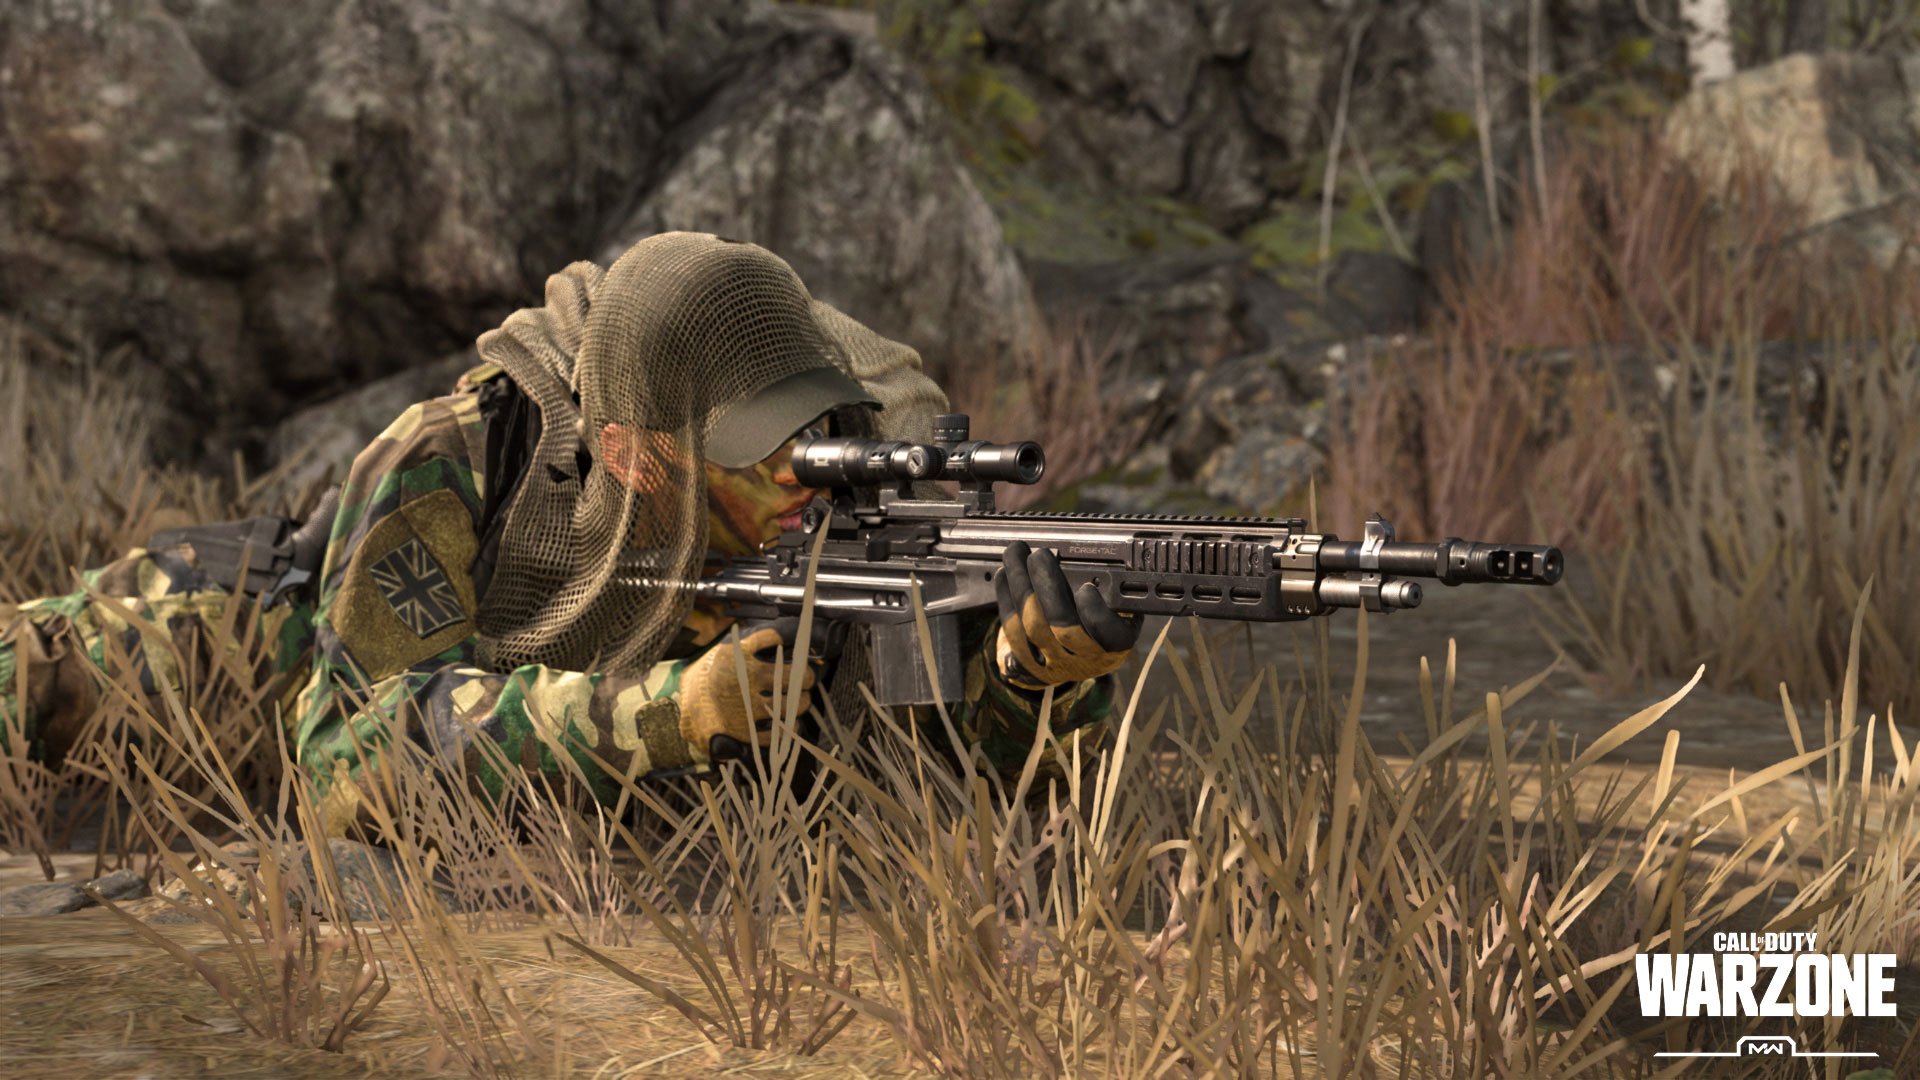 Call of duty: warzone recebe um modo de snipers e shotguns | a9b4ae40 bevnky3eufphqgmdiuuiwh | fps | call of duty: warzone fps